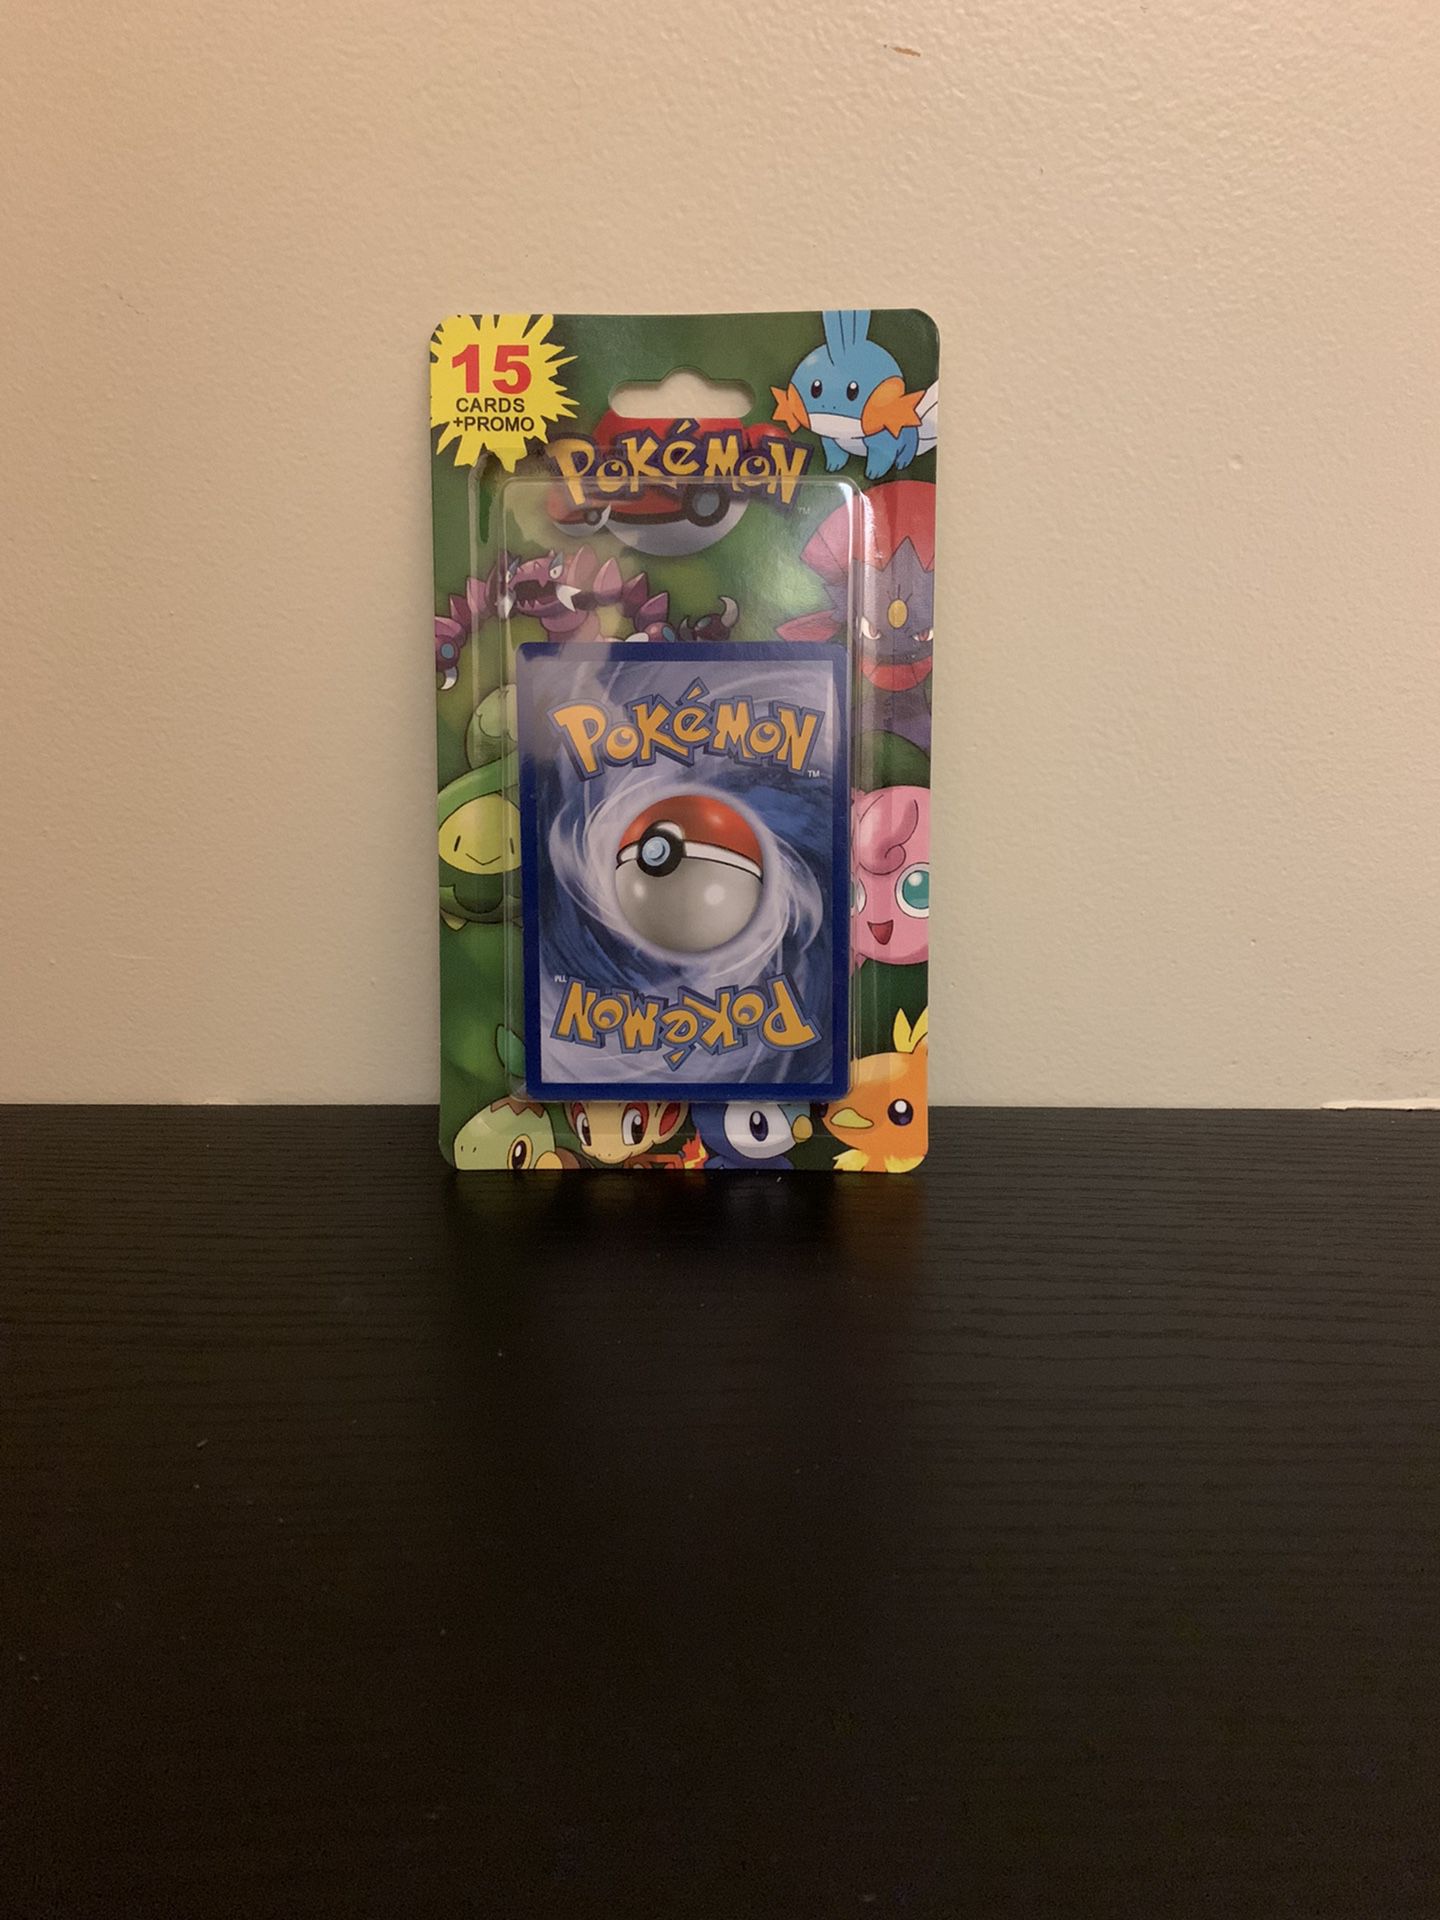 Pokémon Cards, 15 Cards + Promo